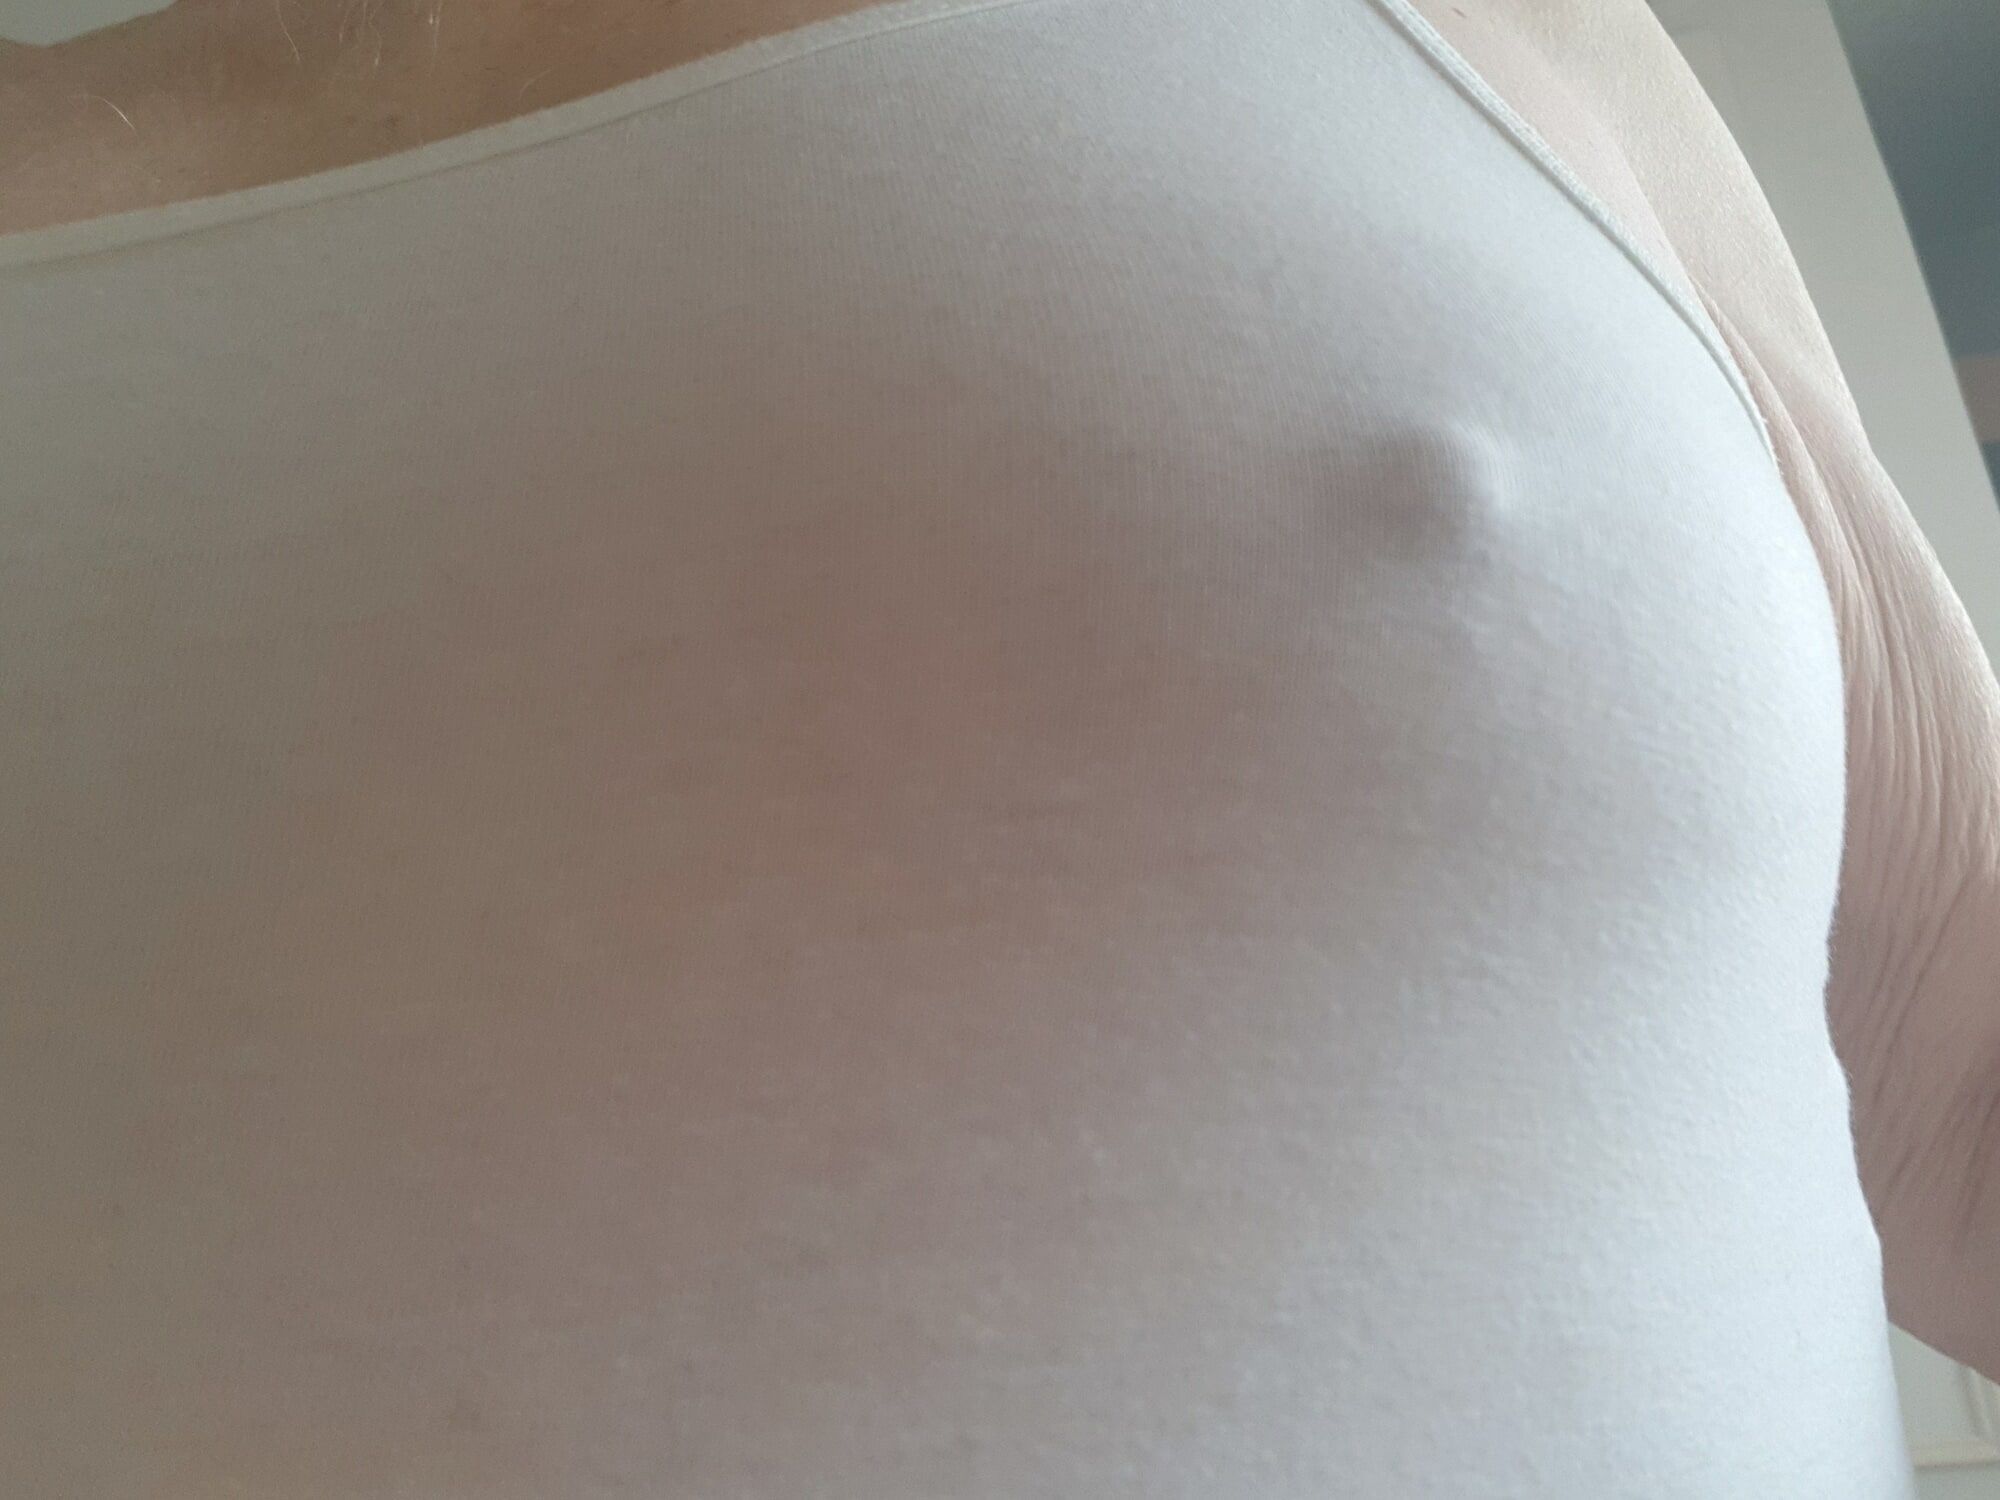 My nipples